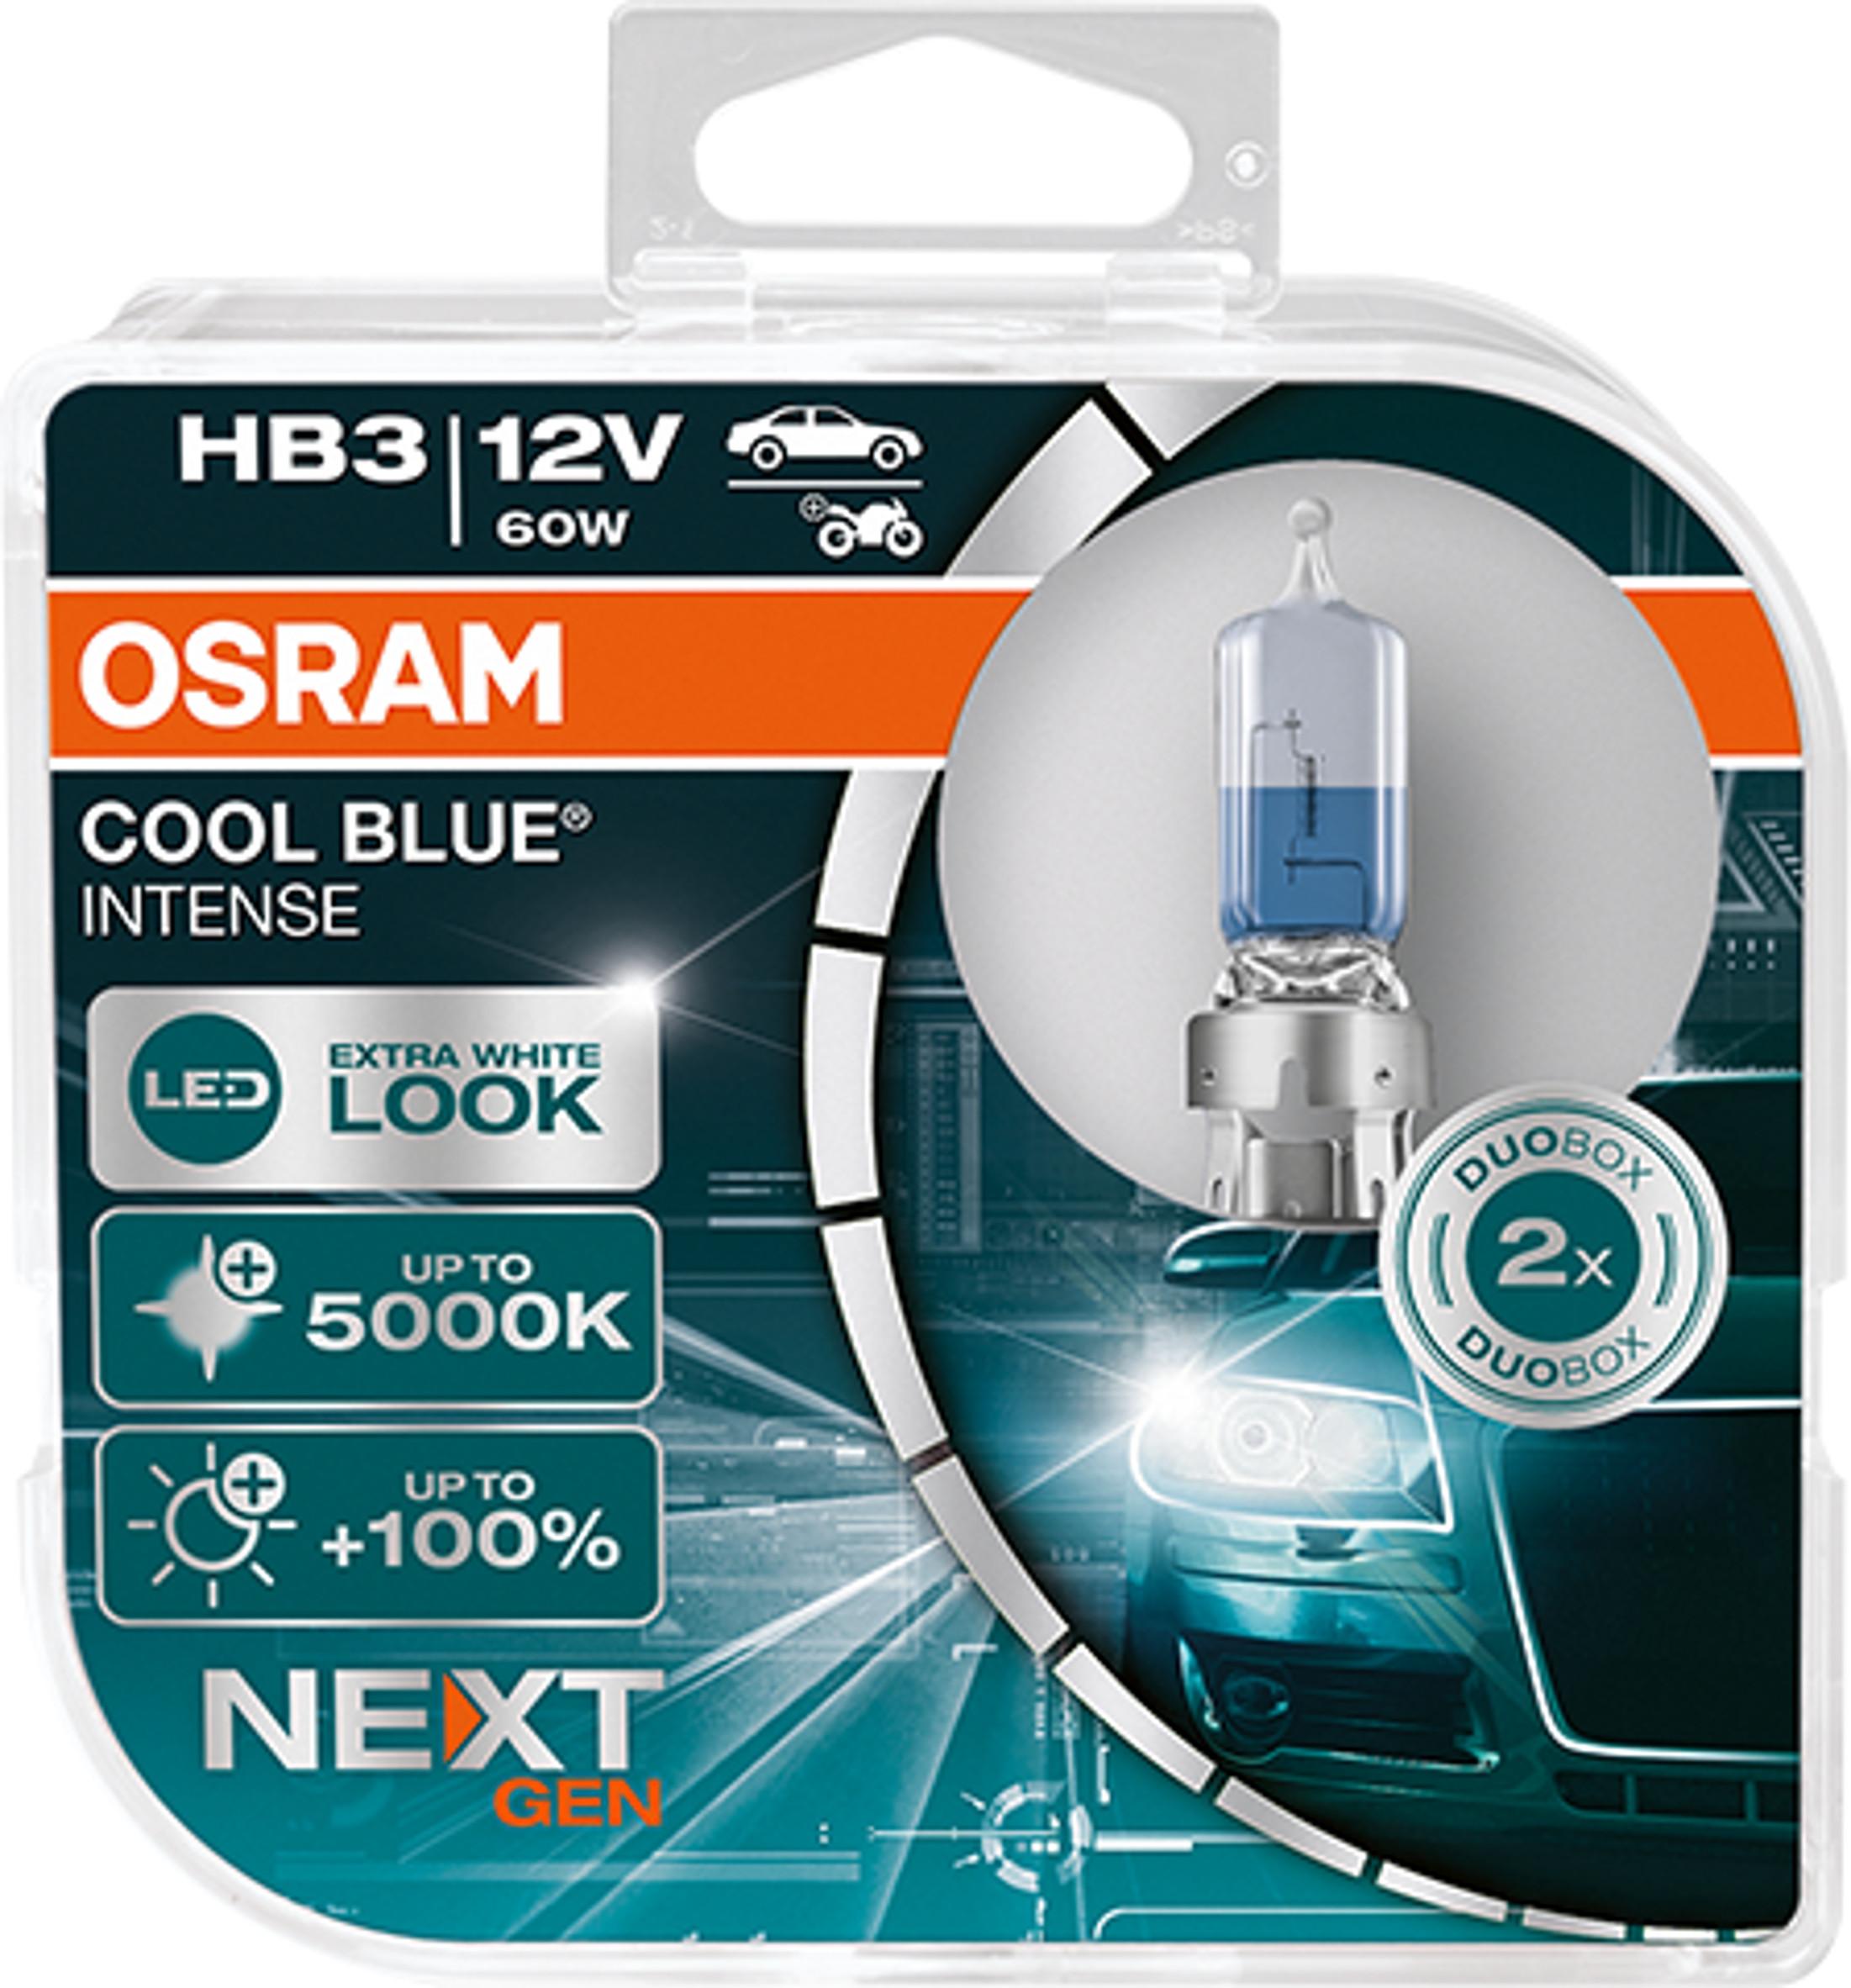 OSRAM HB3 COOL BLUE® INTENSE NEXT GENERATION Duo Box